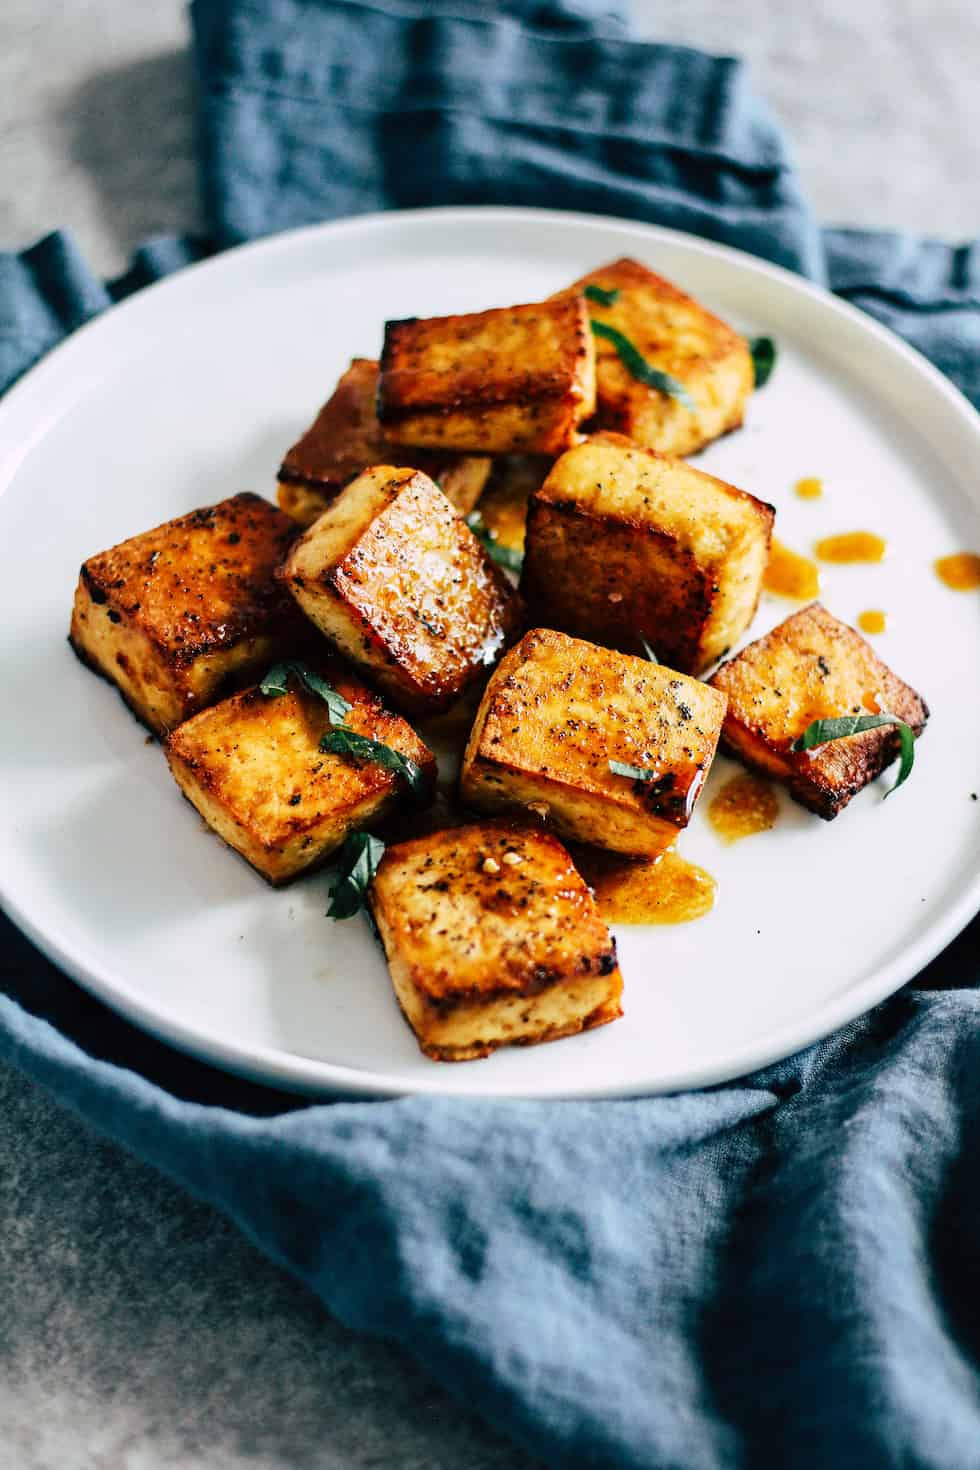 Crispy Tofu Recipes
 Crispy Tofu Recipe